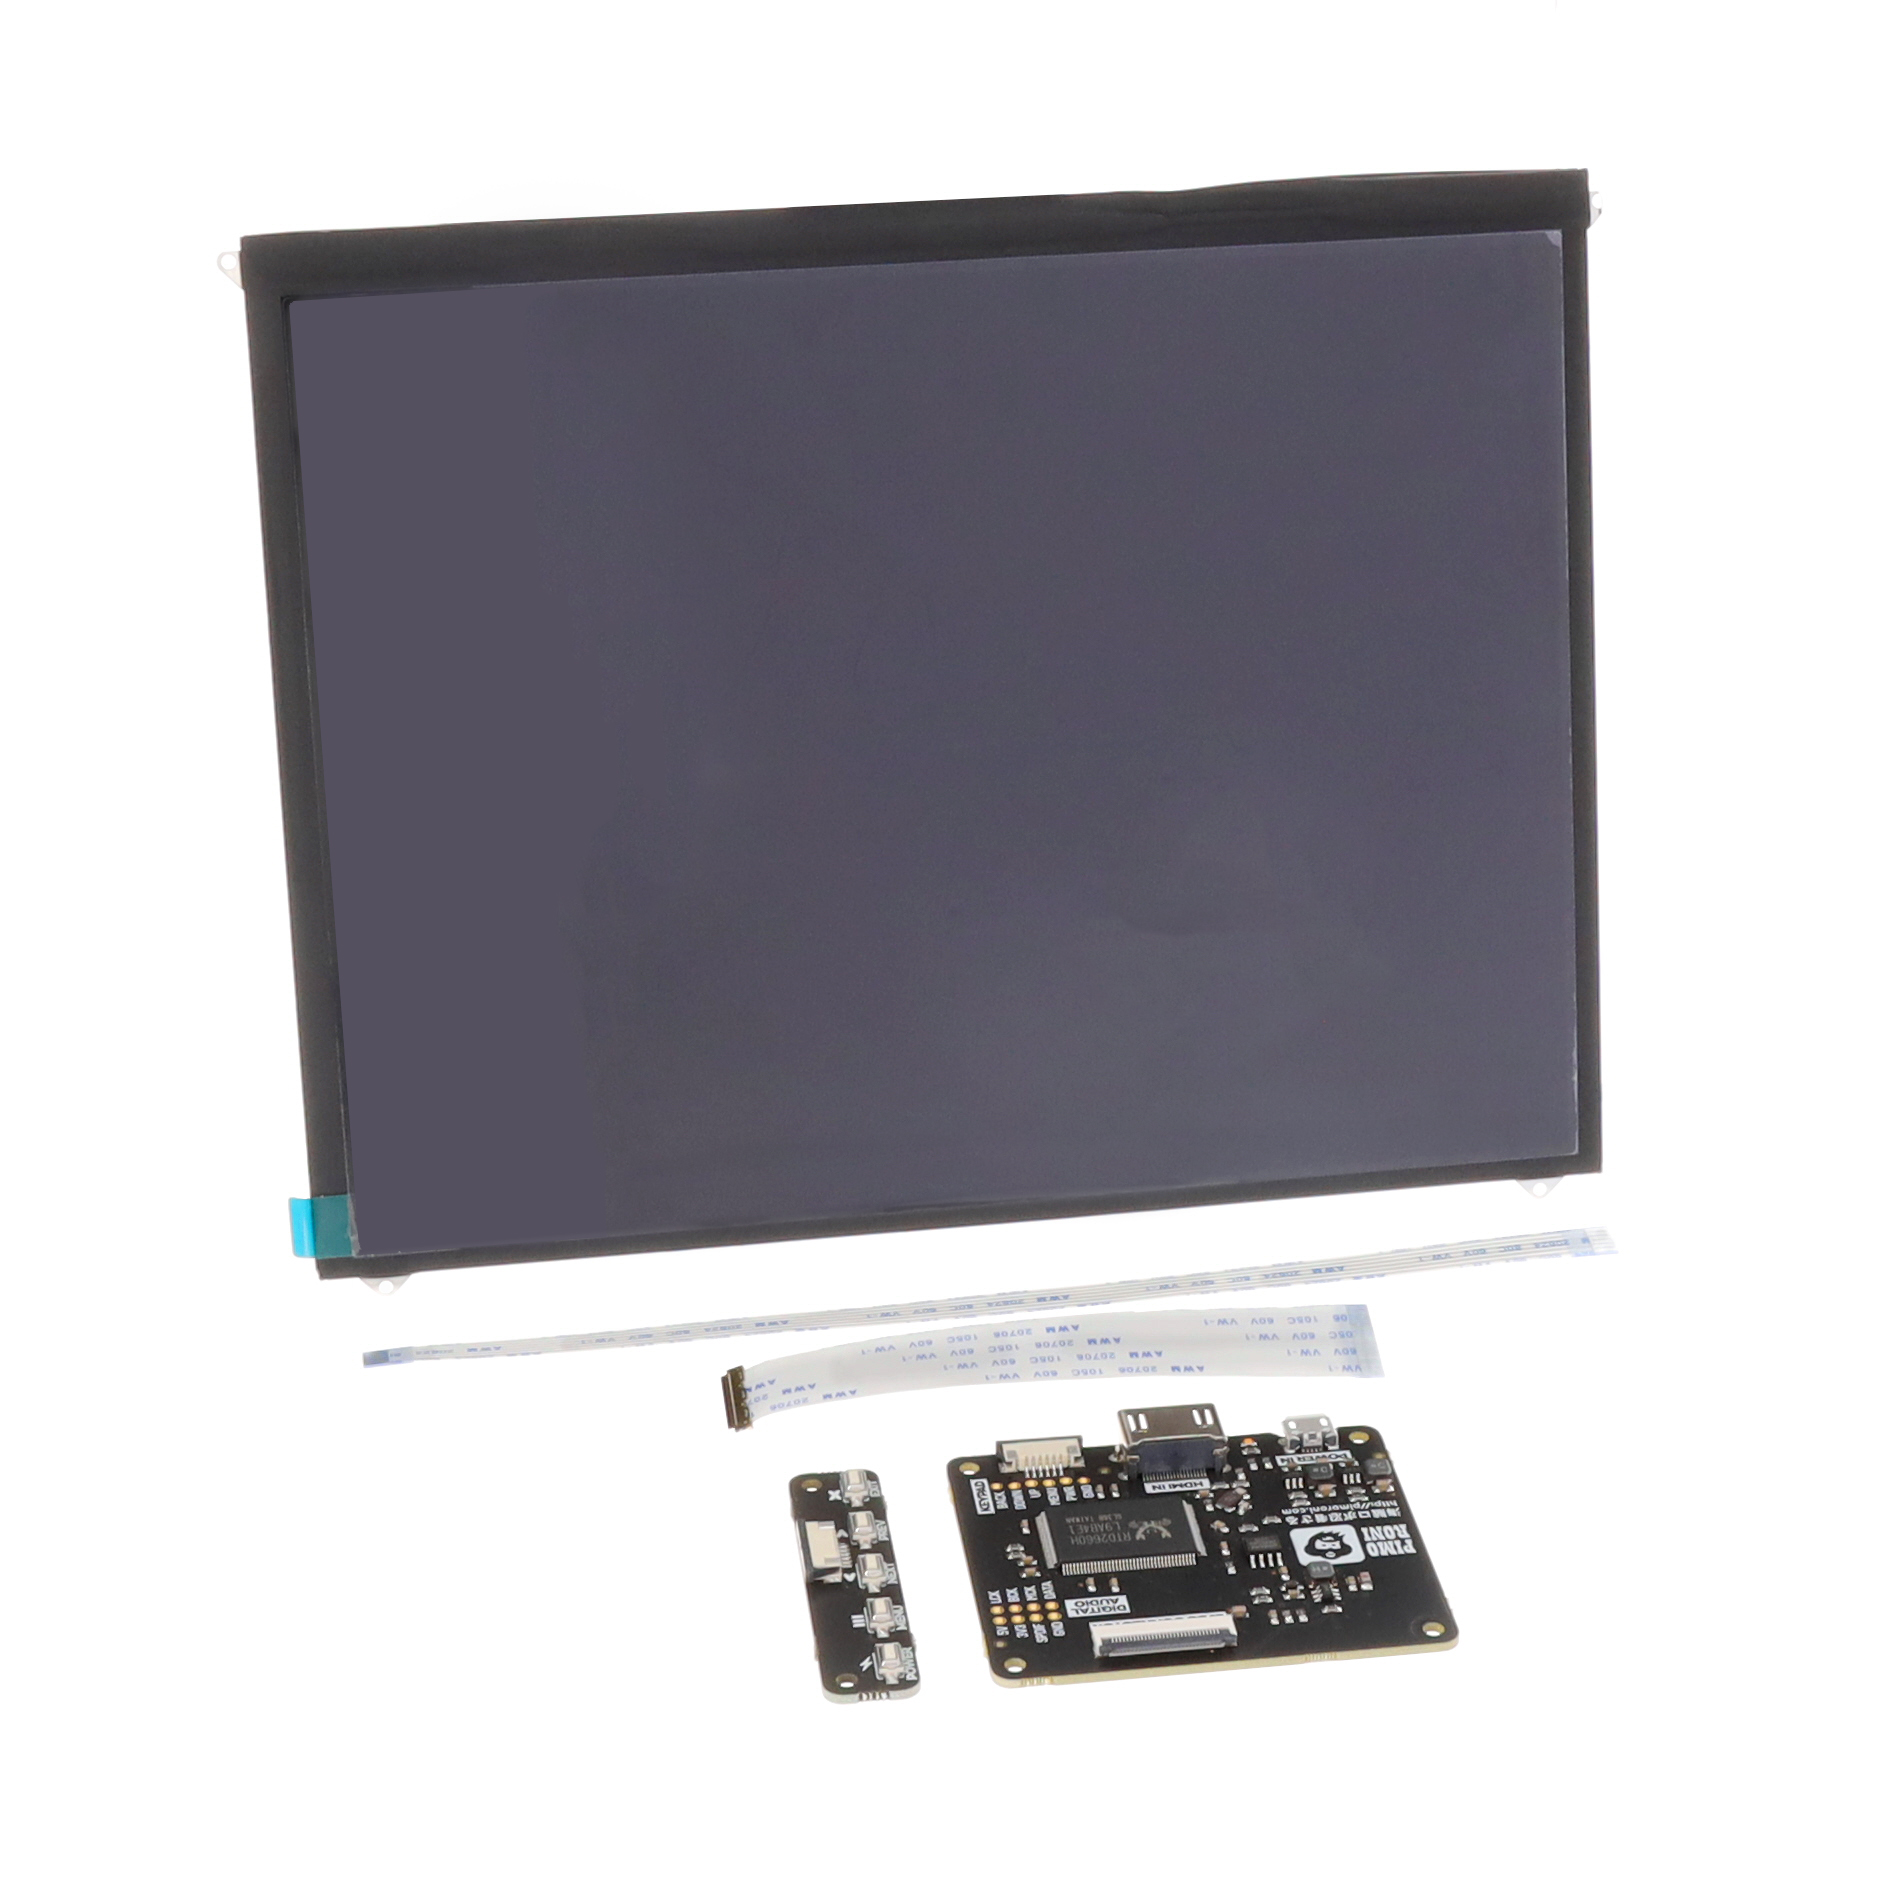 【PIM431】HDMI 10" LCD SCREEN KIT (1024X76